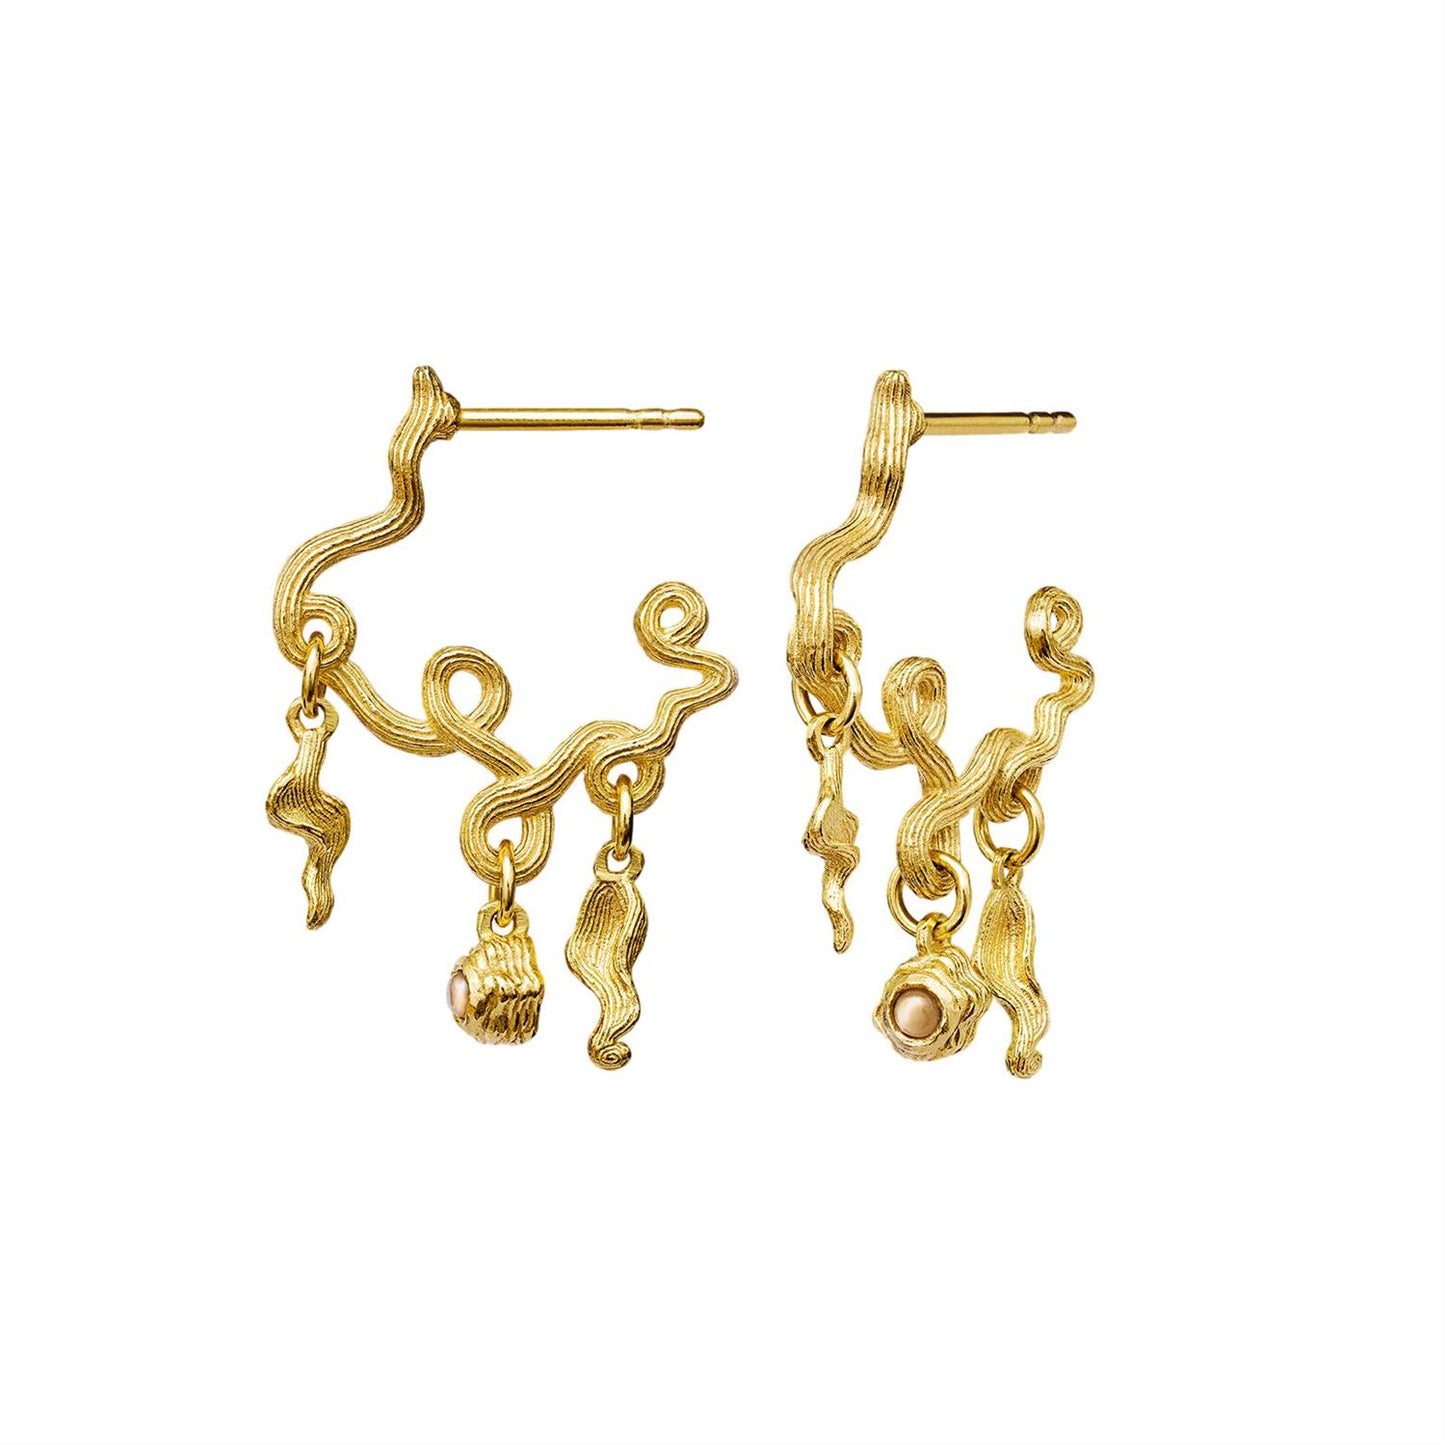 Rayon earrings